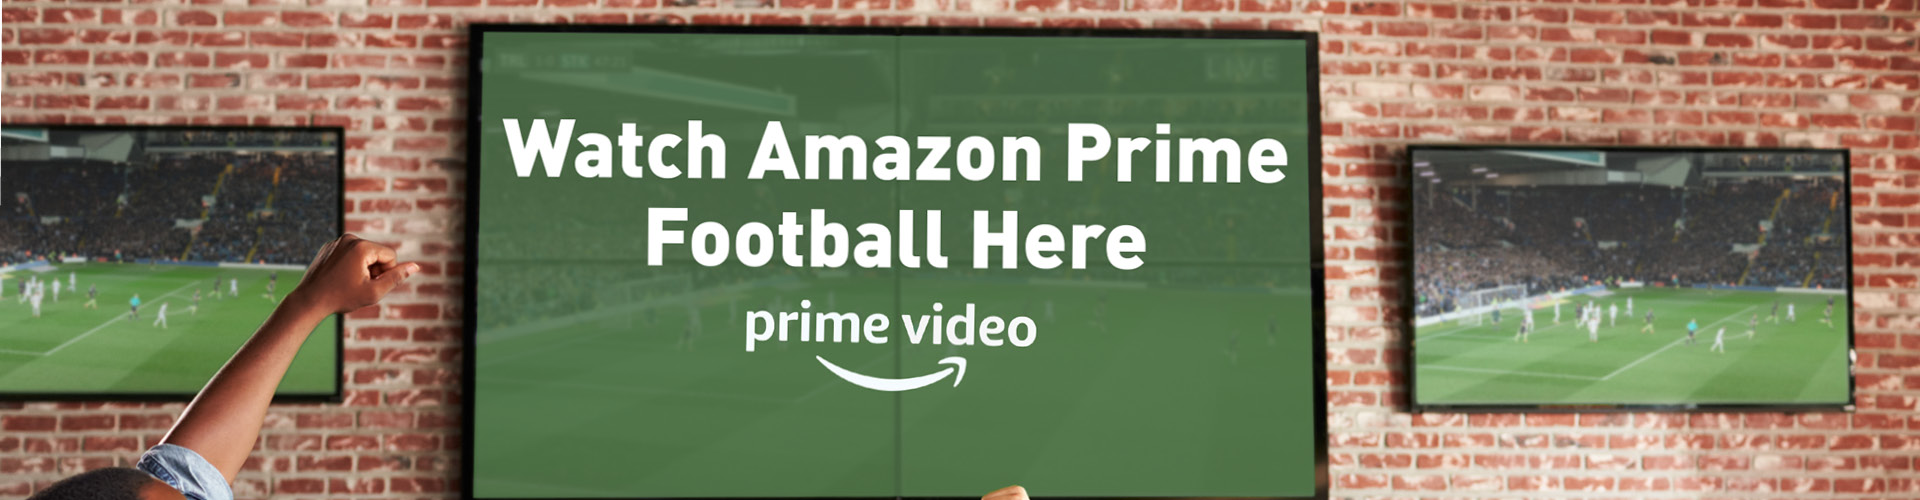 Watch Amazon Prime football at The William Morgan in Prestatyn